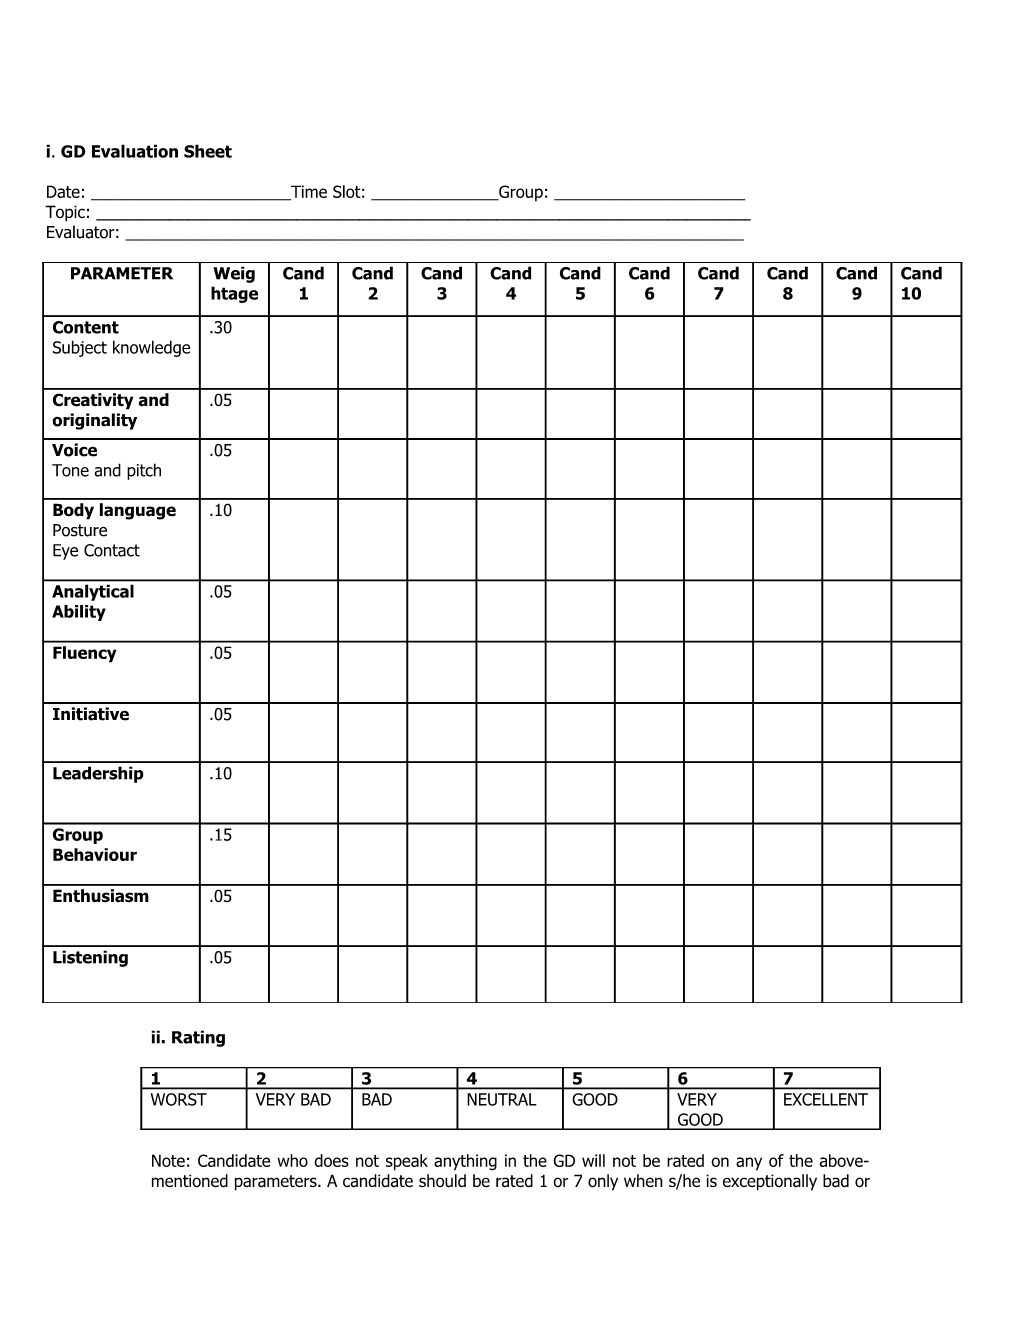 I. GD Evaluation Sheet